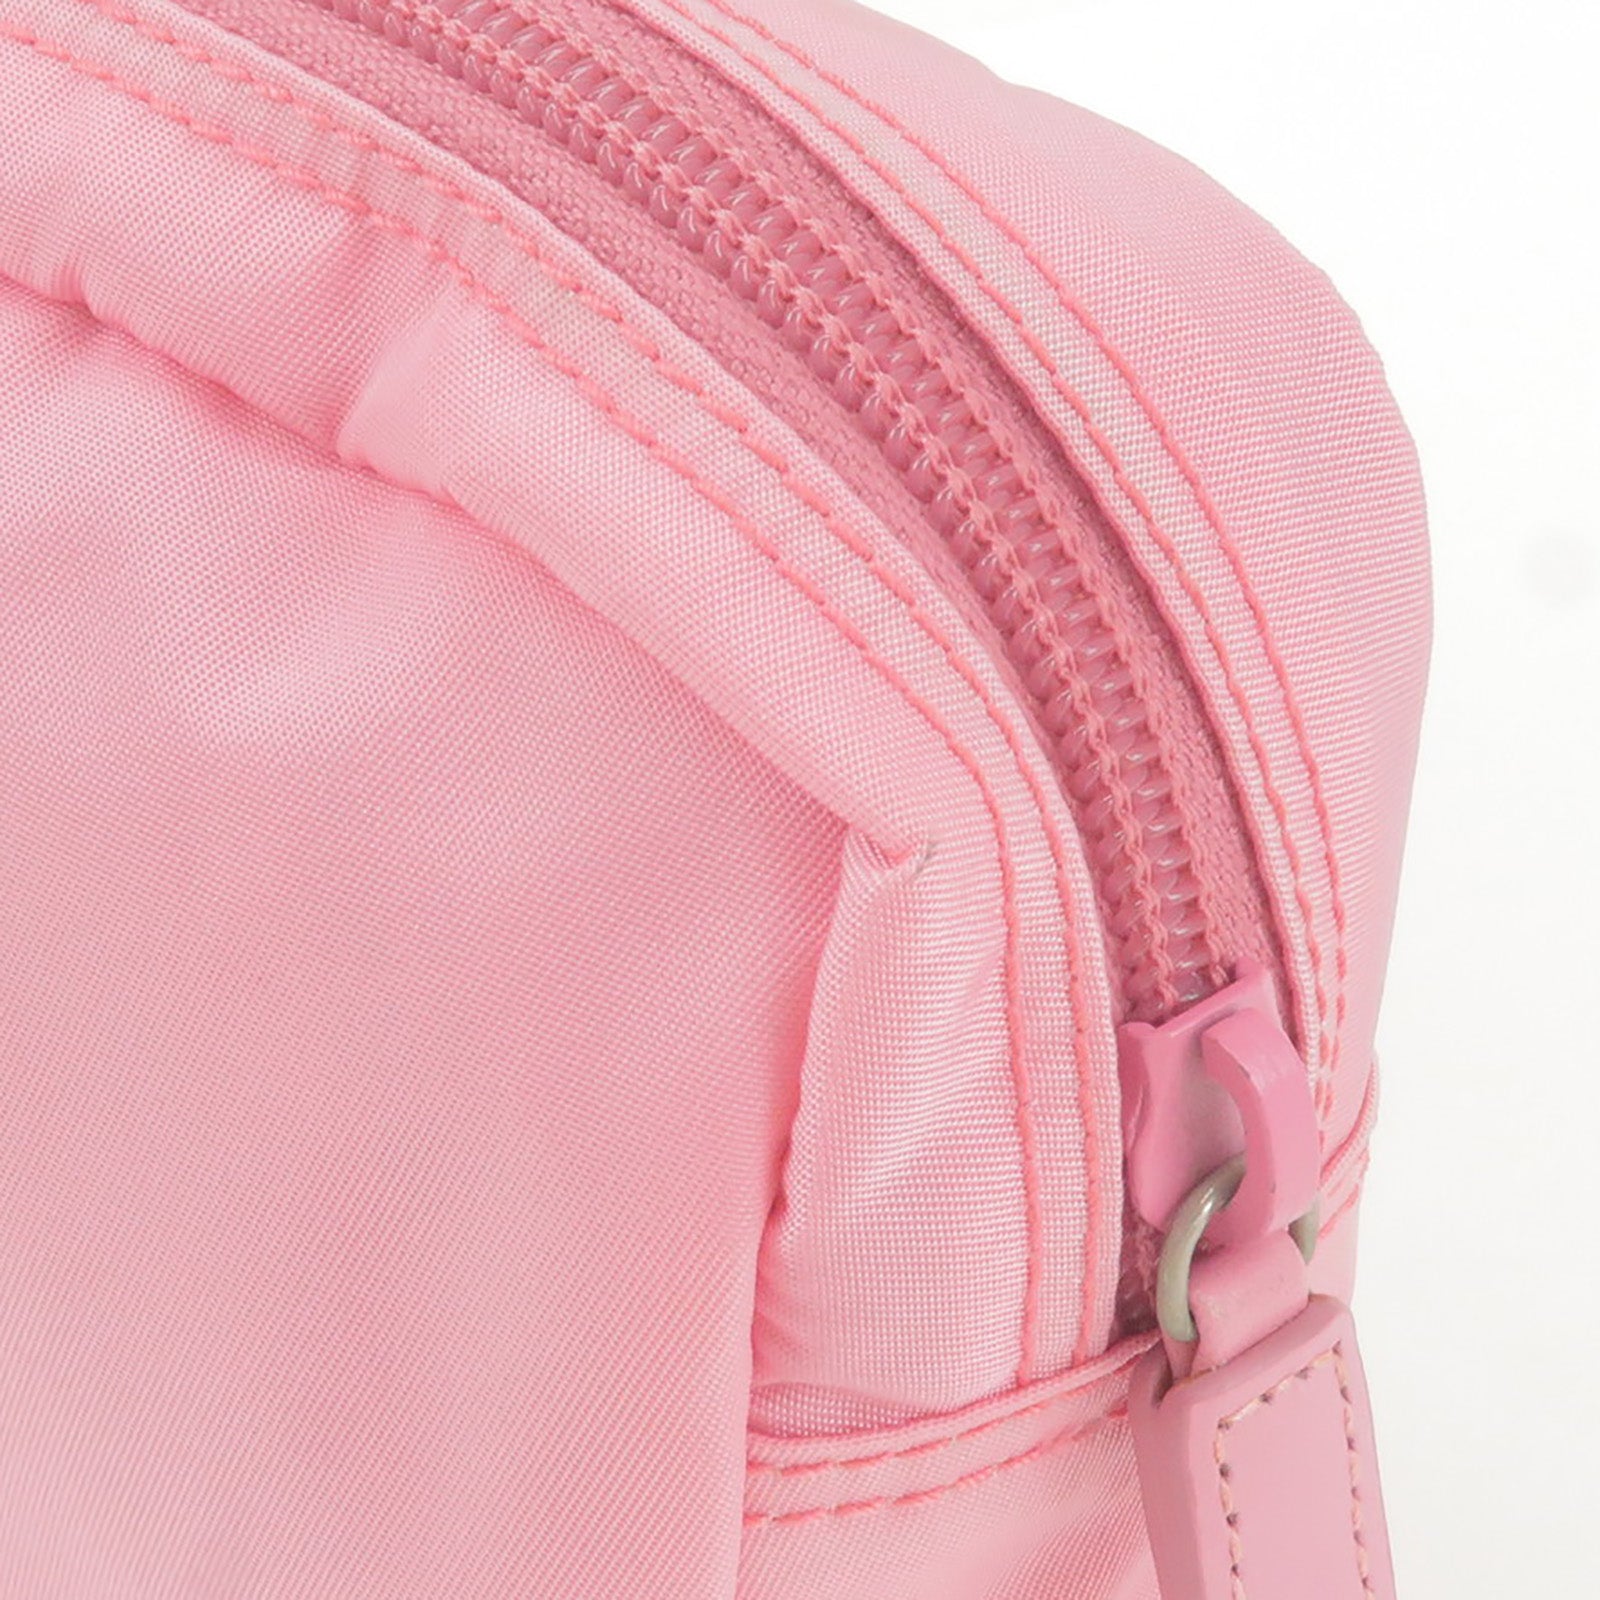 PRADA-Logo-Nylon-Leather-Pouch-Clutch-Bag-Pink-MV340 – dct-ep_vintage  luxury Store